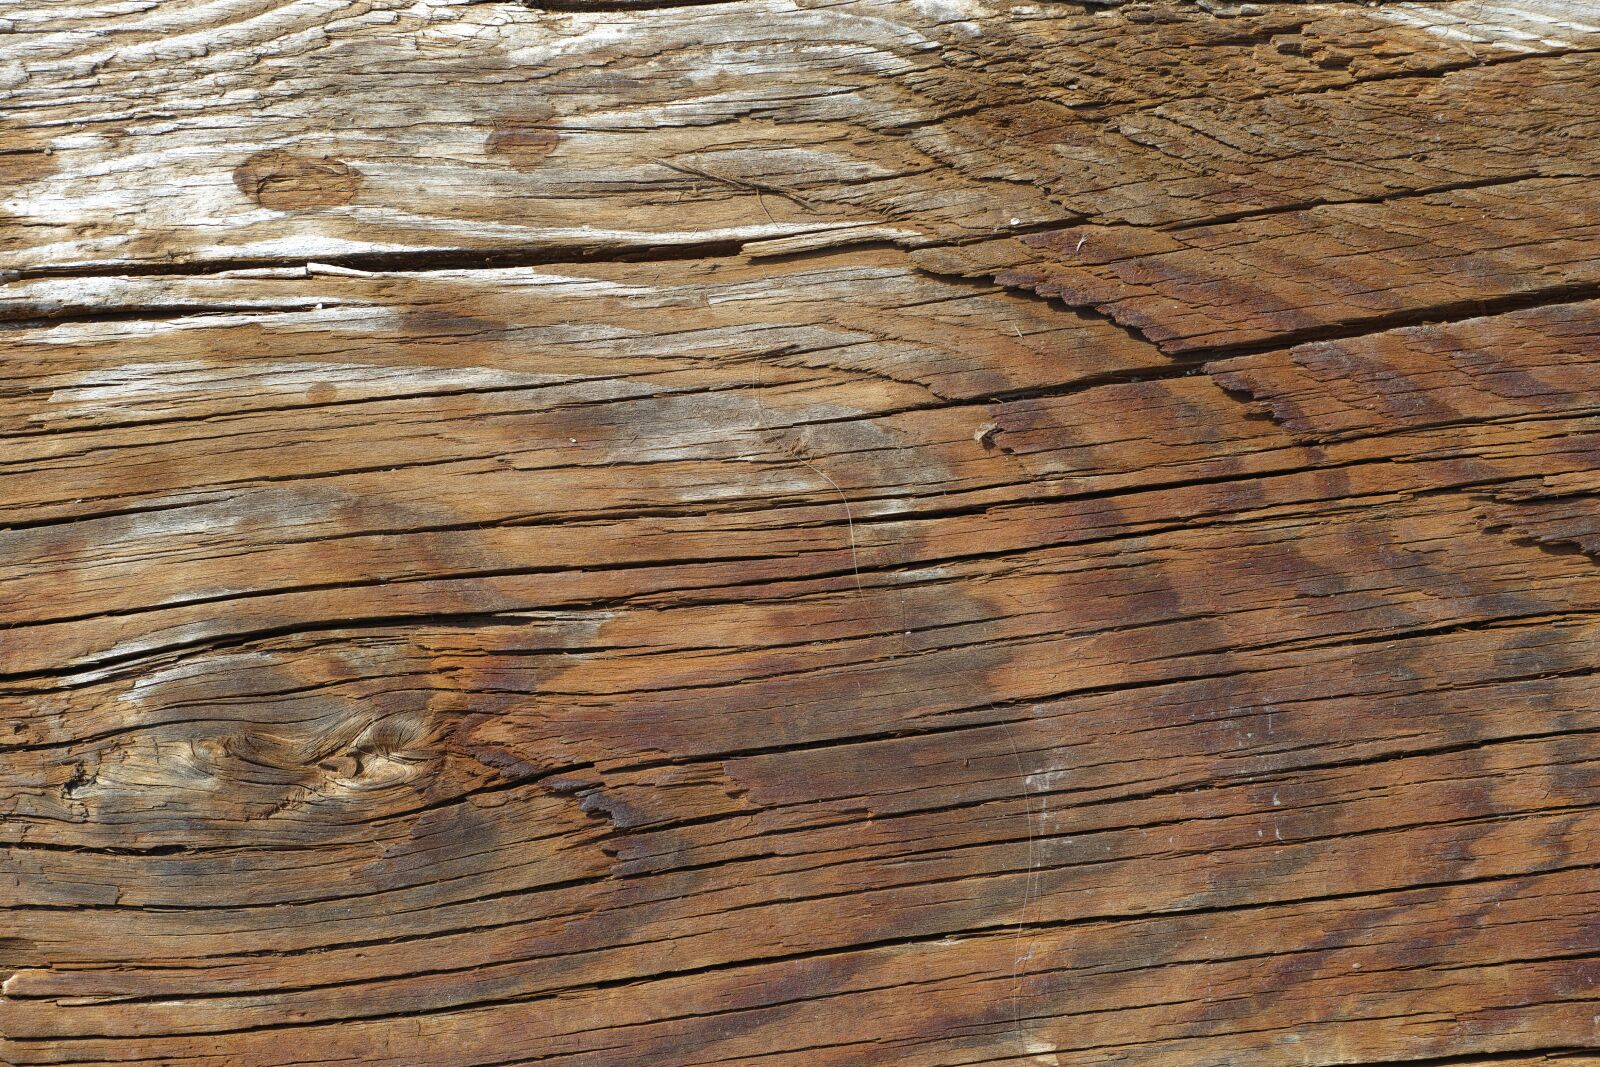 Sigma DP3 Merrill sample photo. Wood-fibre boards, tree, ground photography